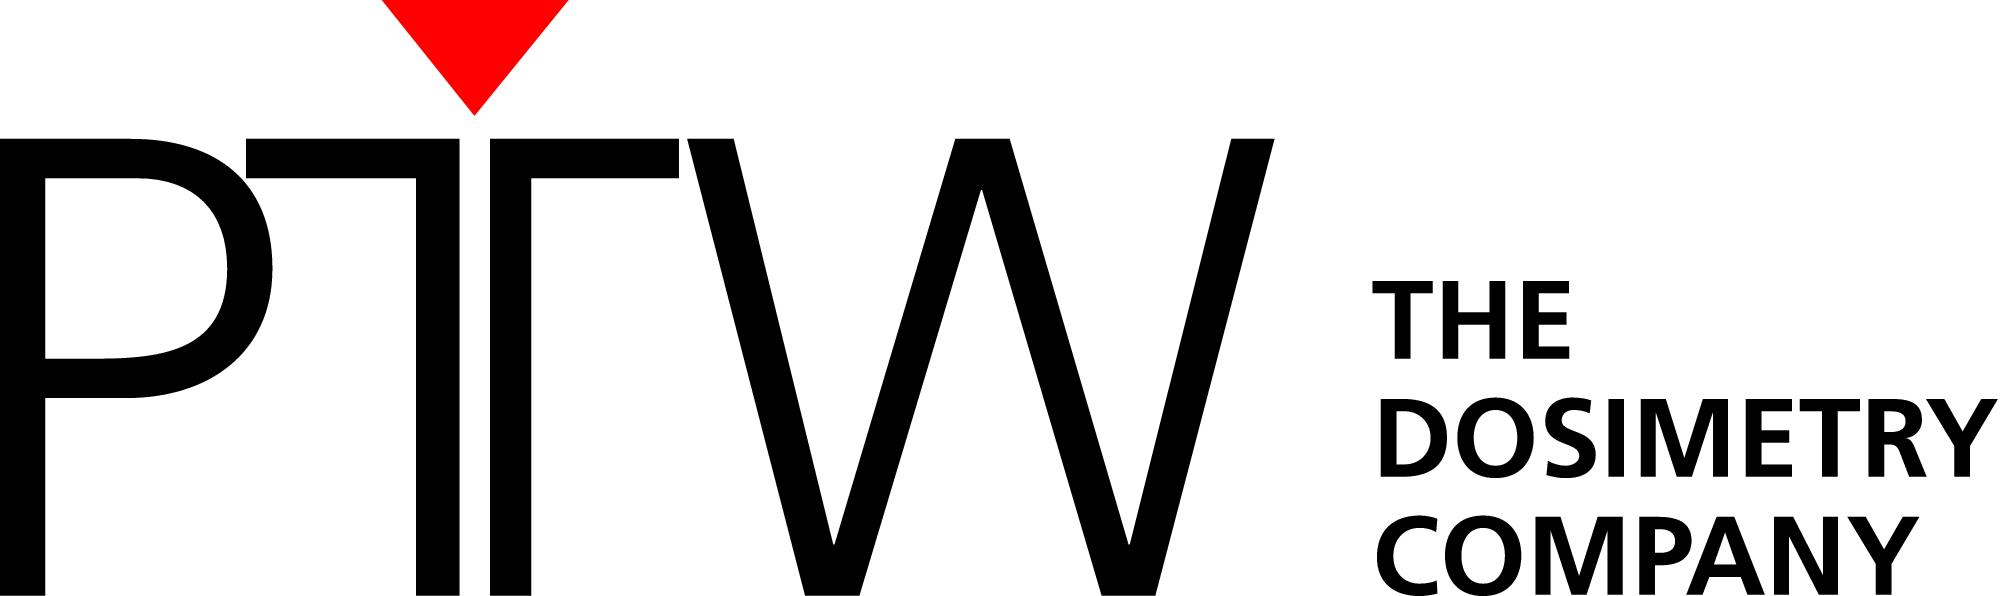 PTW Freiburg GmbH logo